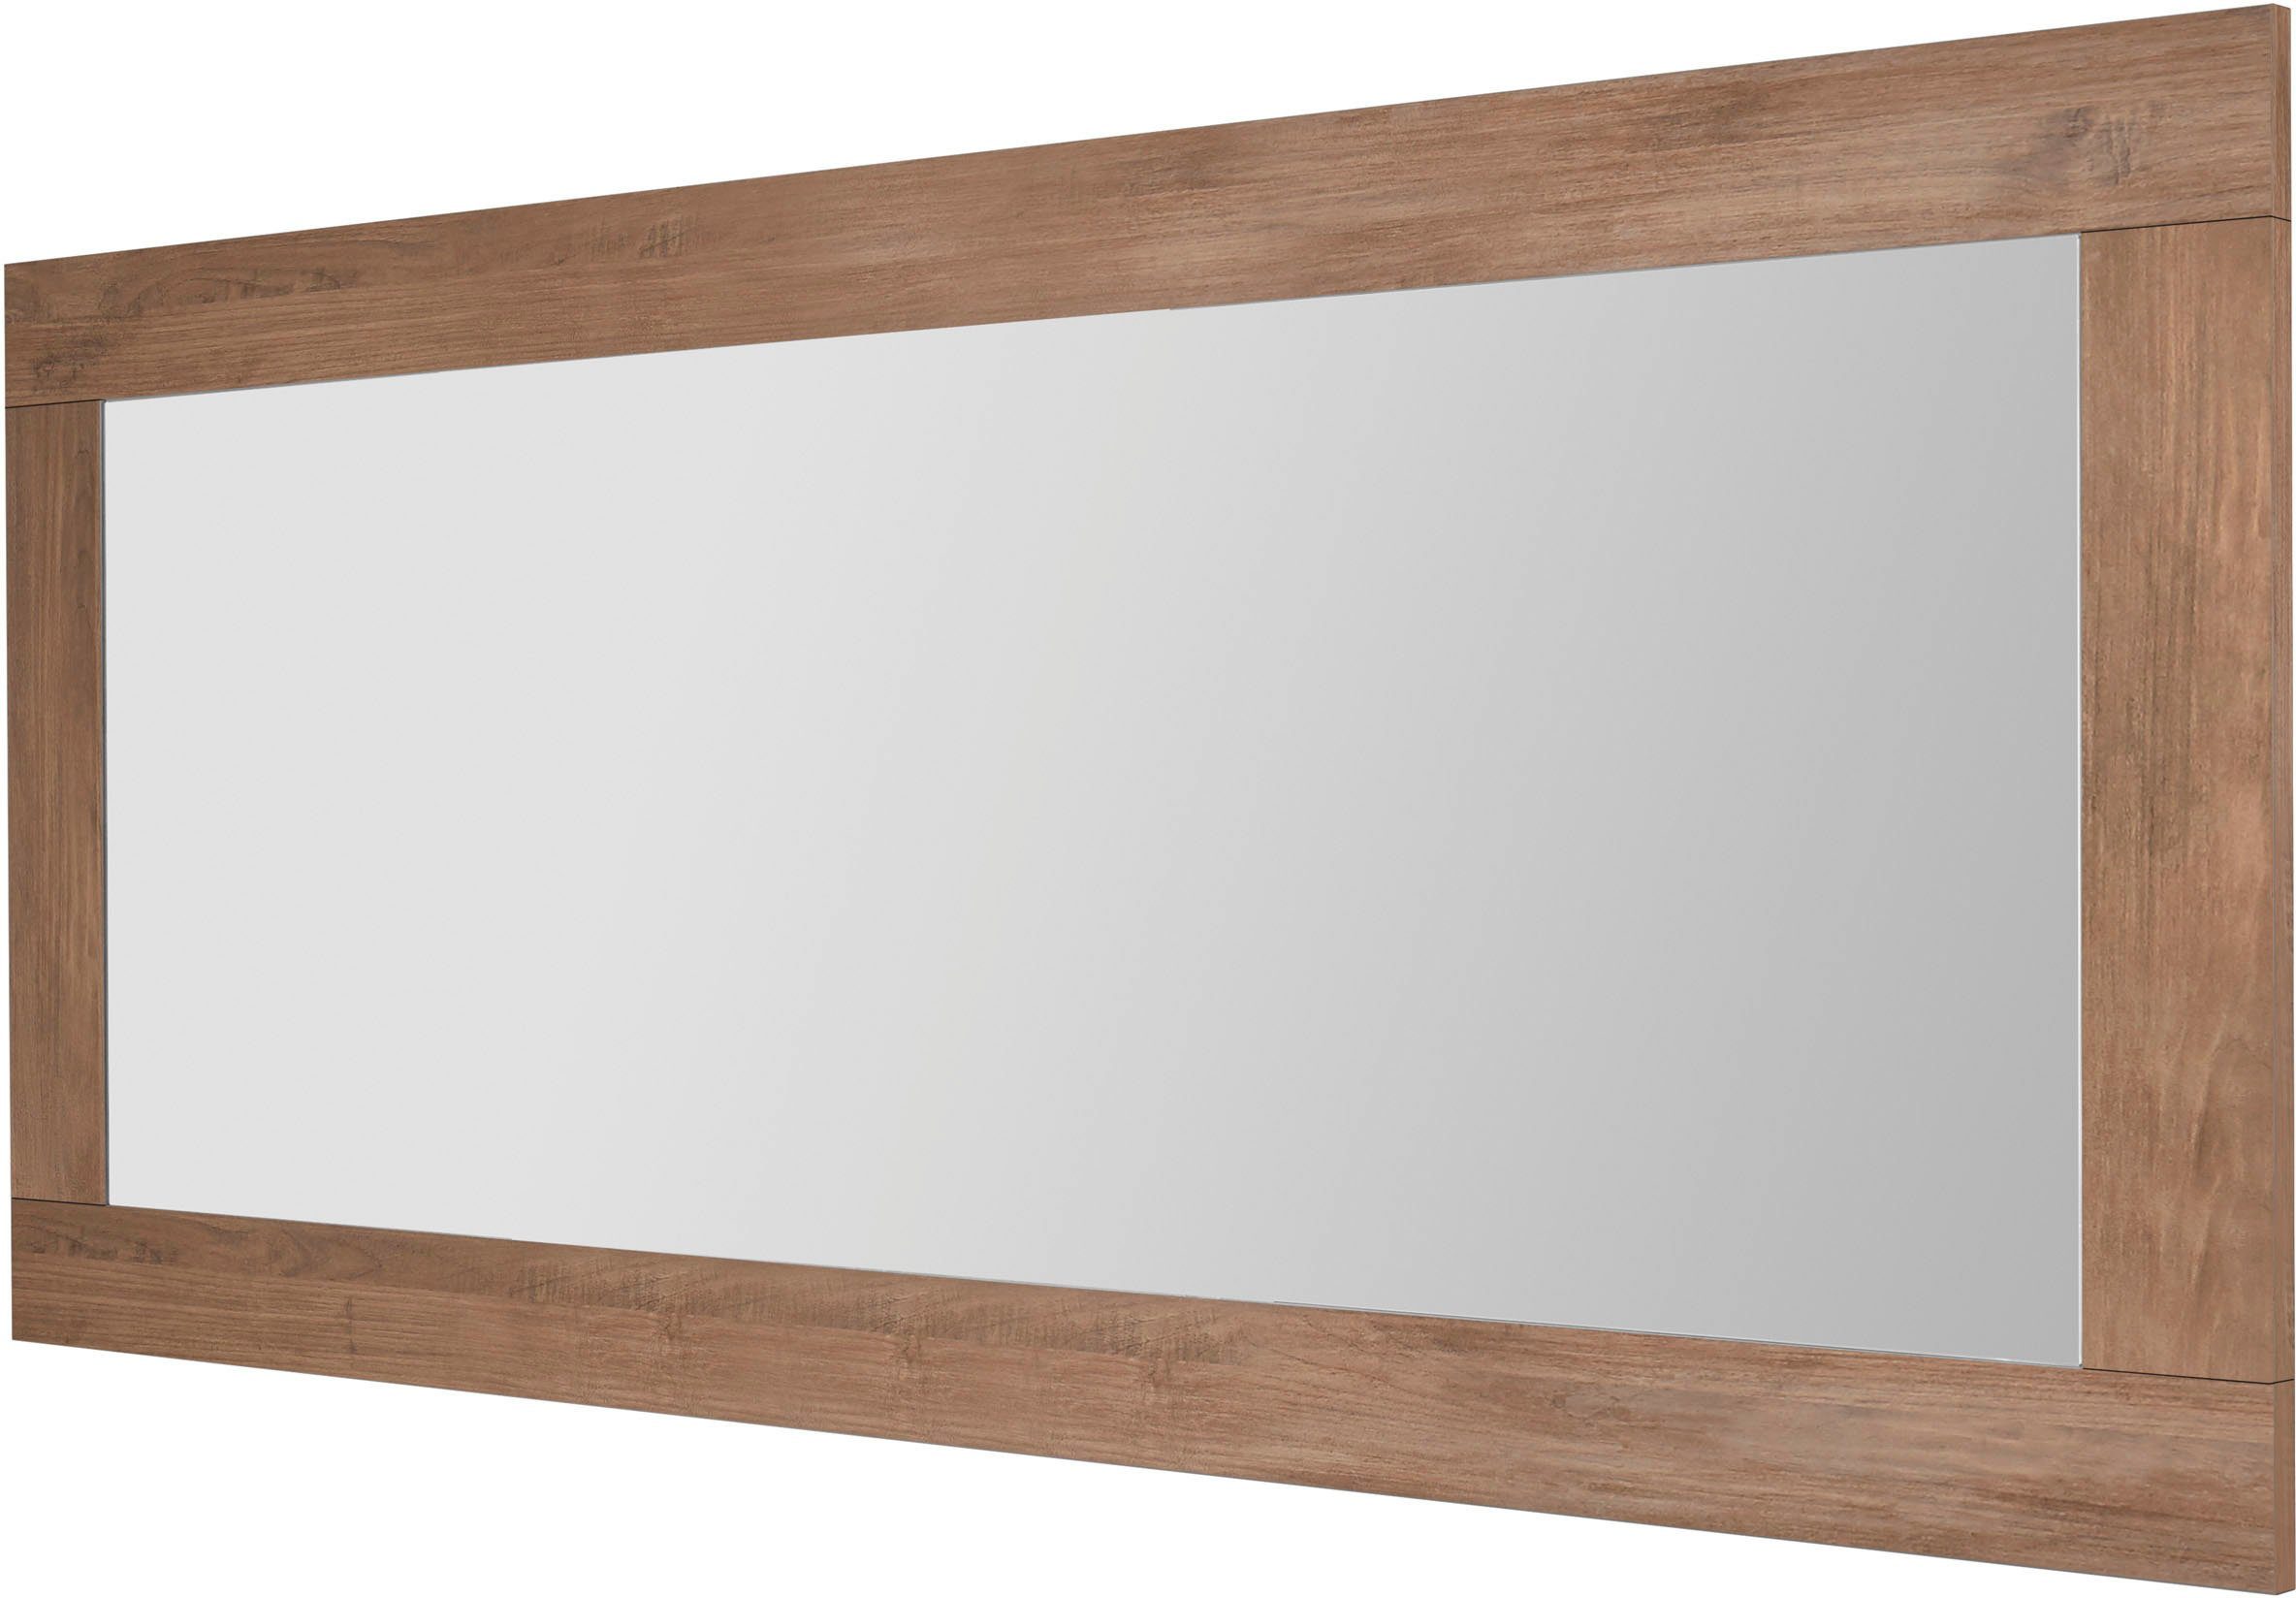 170 Rimini, LC NB Holzstruktur Wandspiegel Mercure cm Breite